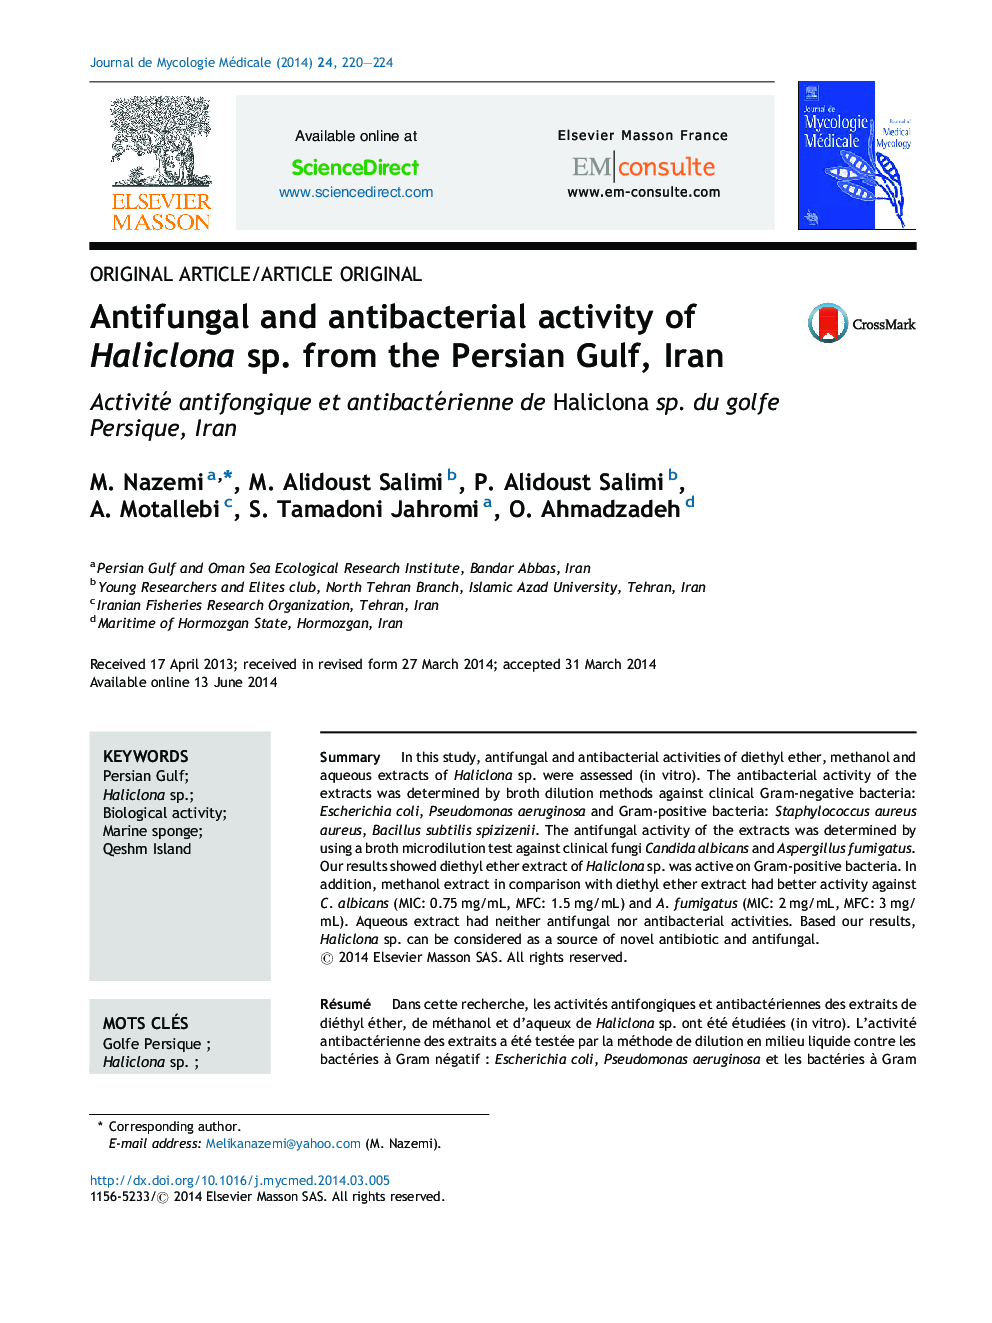 Antifungal and antibacterial activity of Haliclona sp. from the Persian Gulf, Iran